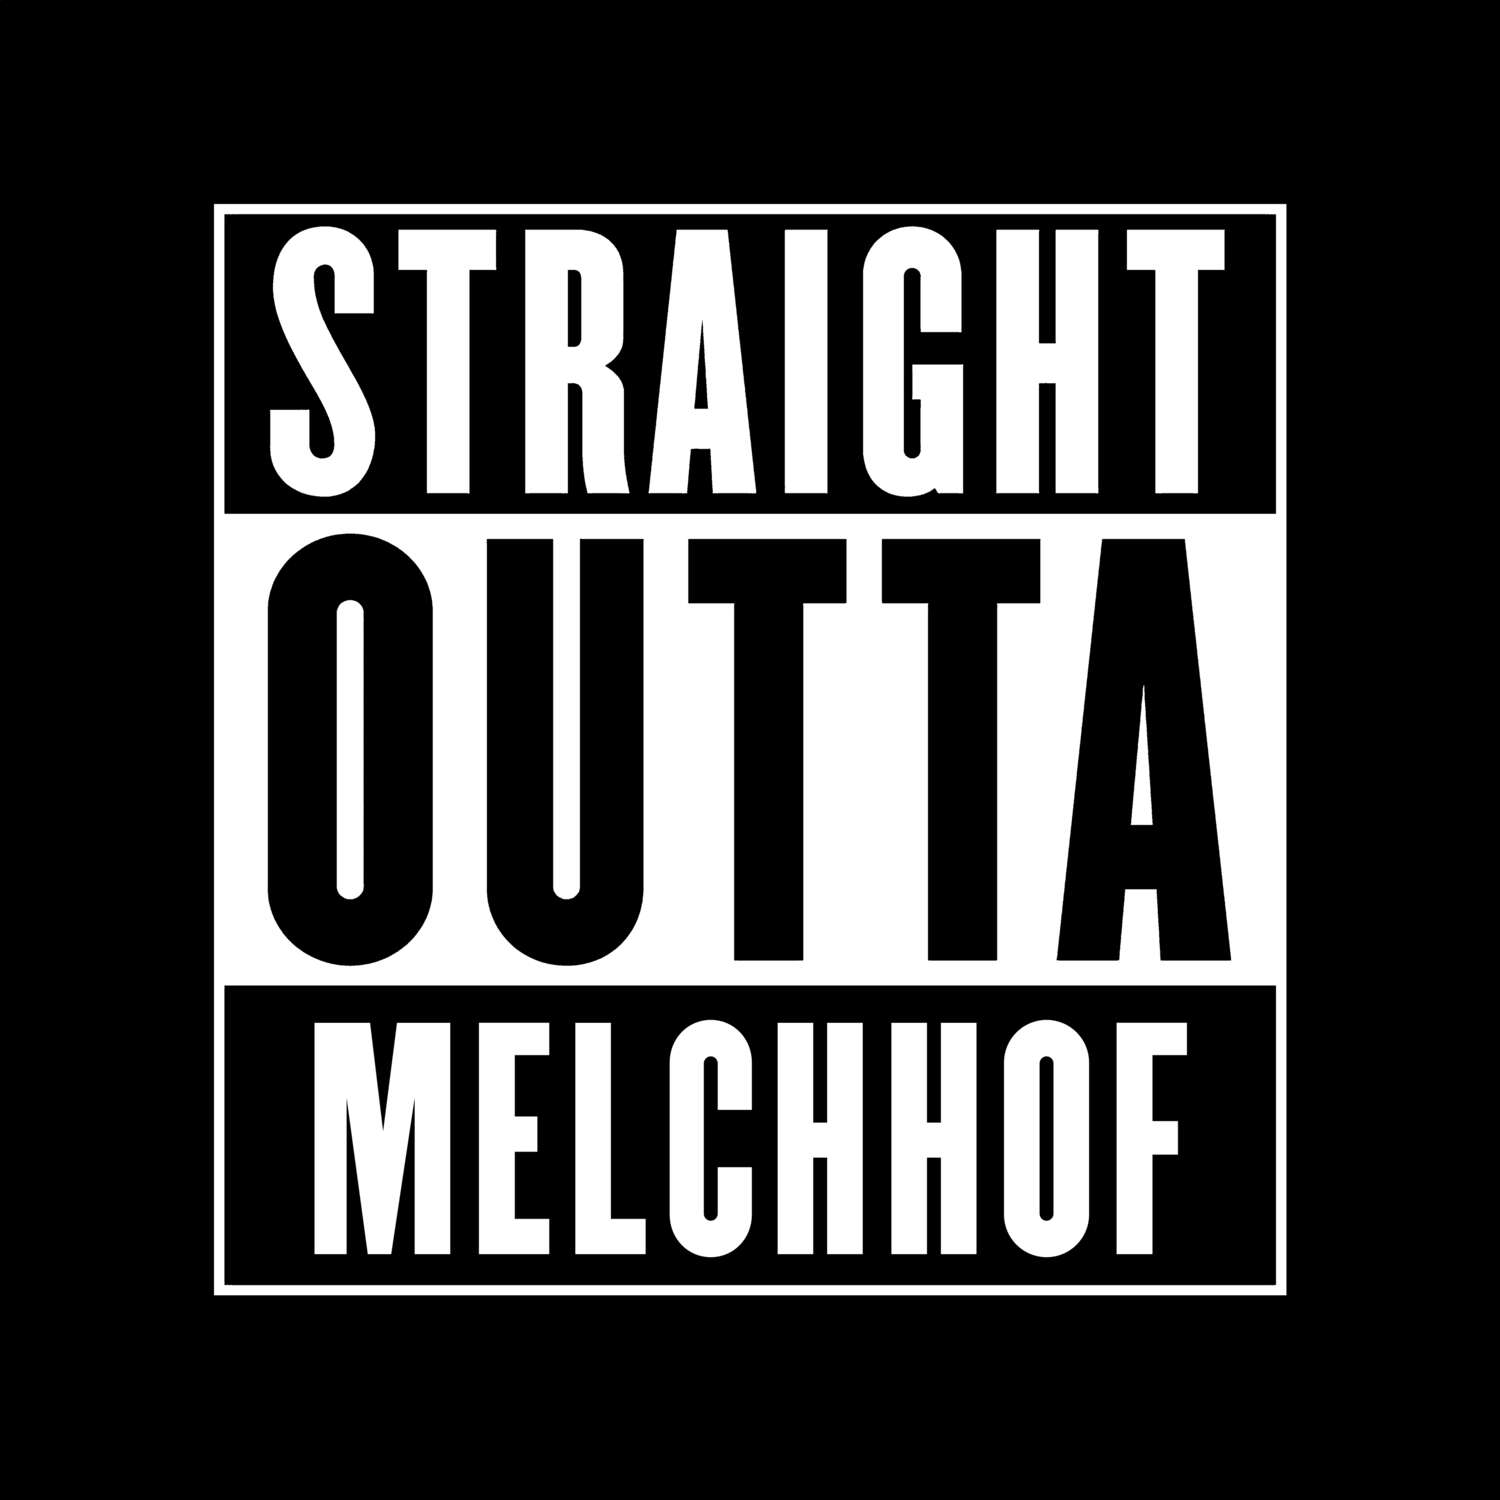 Melchhof T-Shirt »Straight Outta«